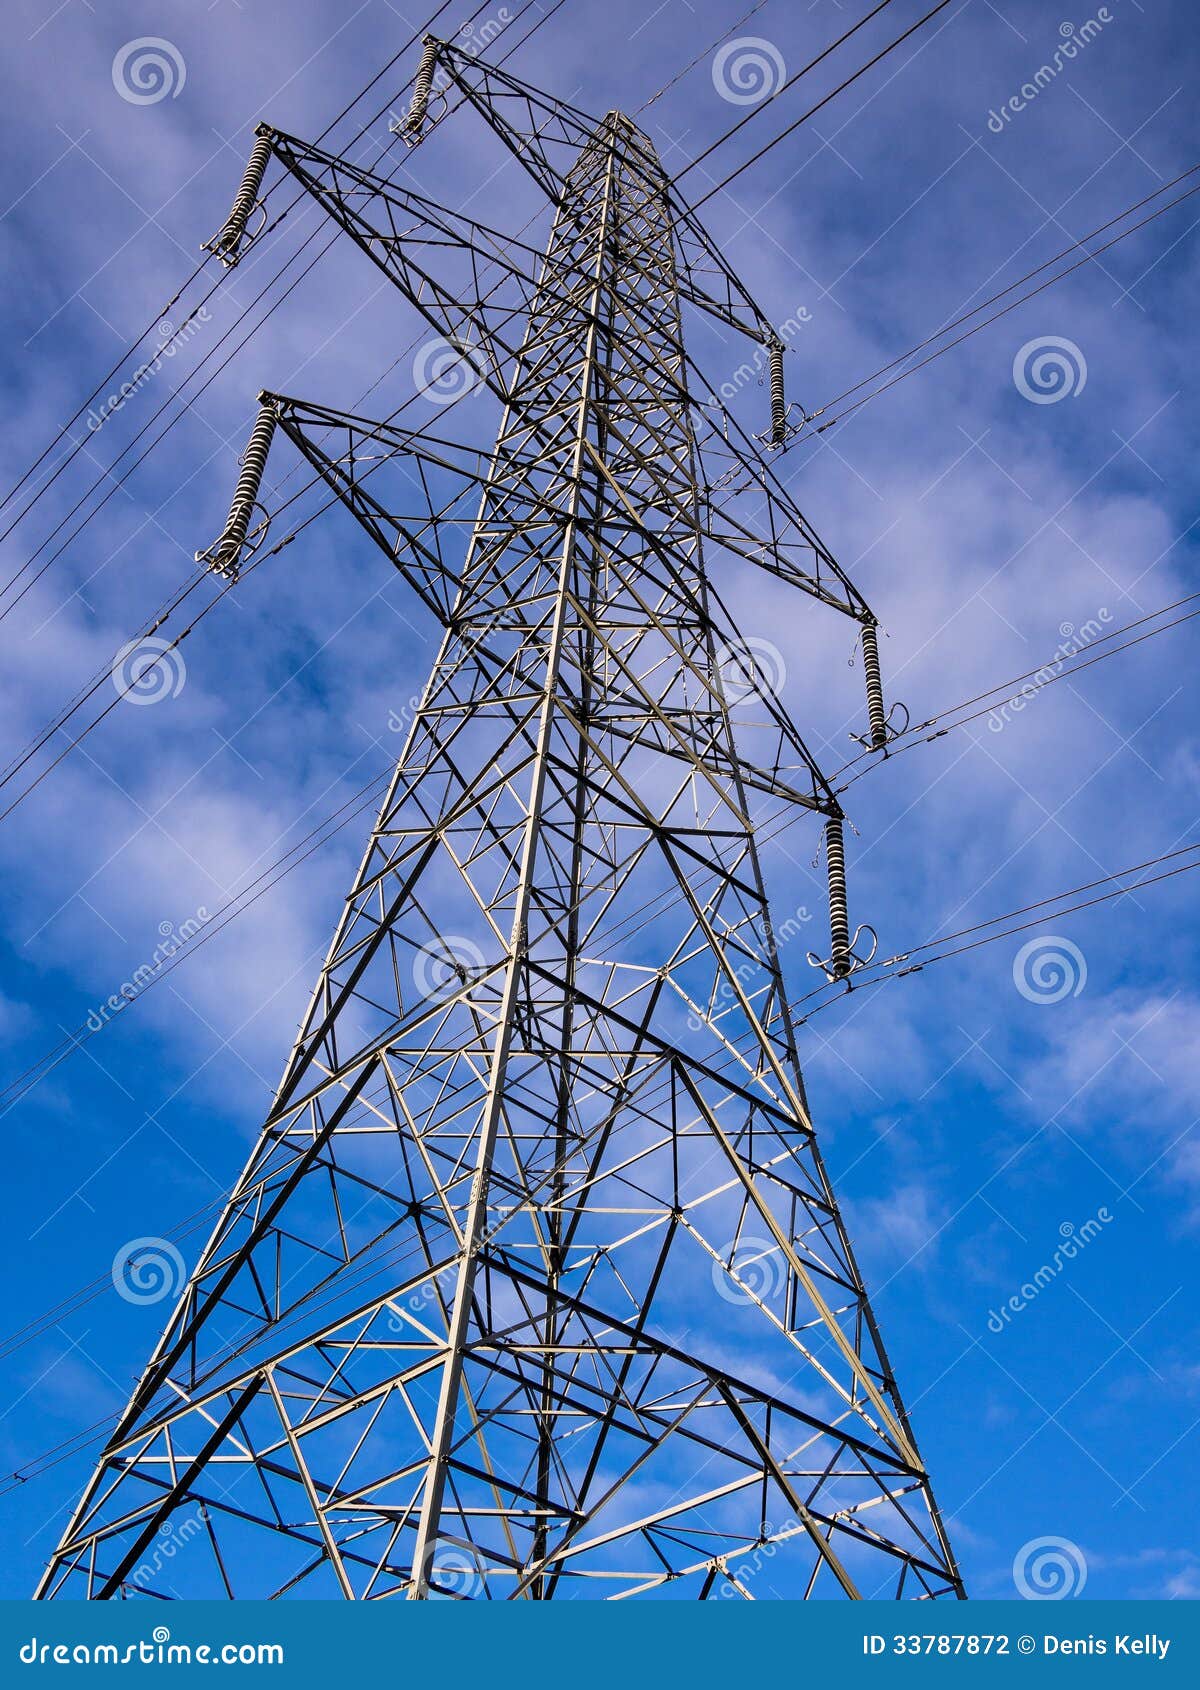 electricity pylon tower